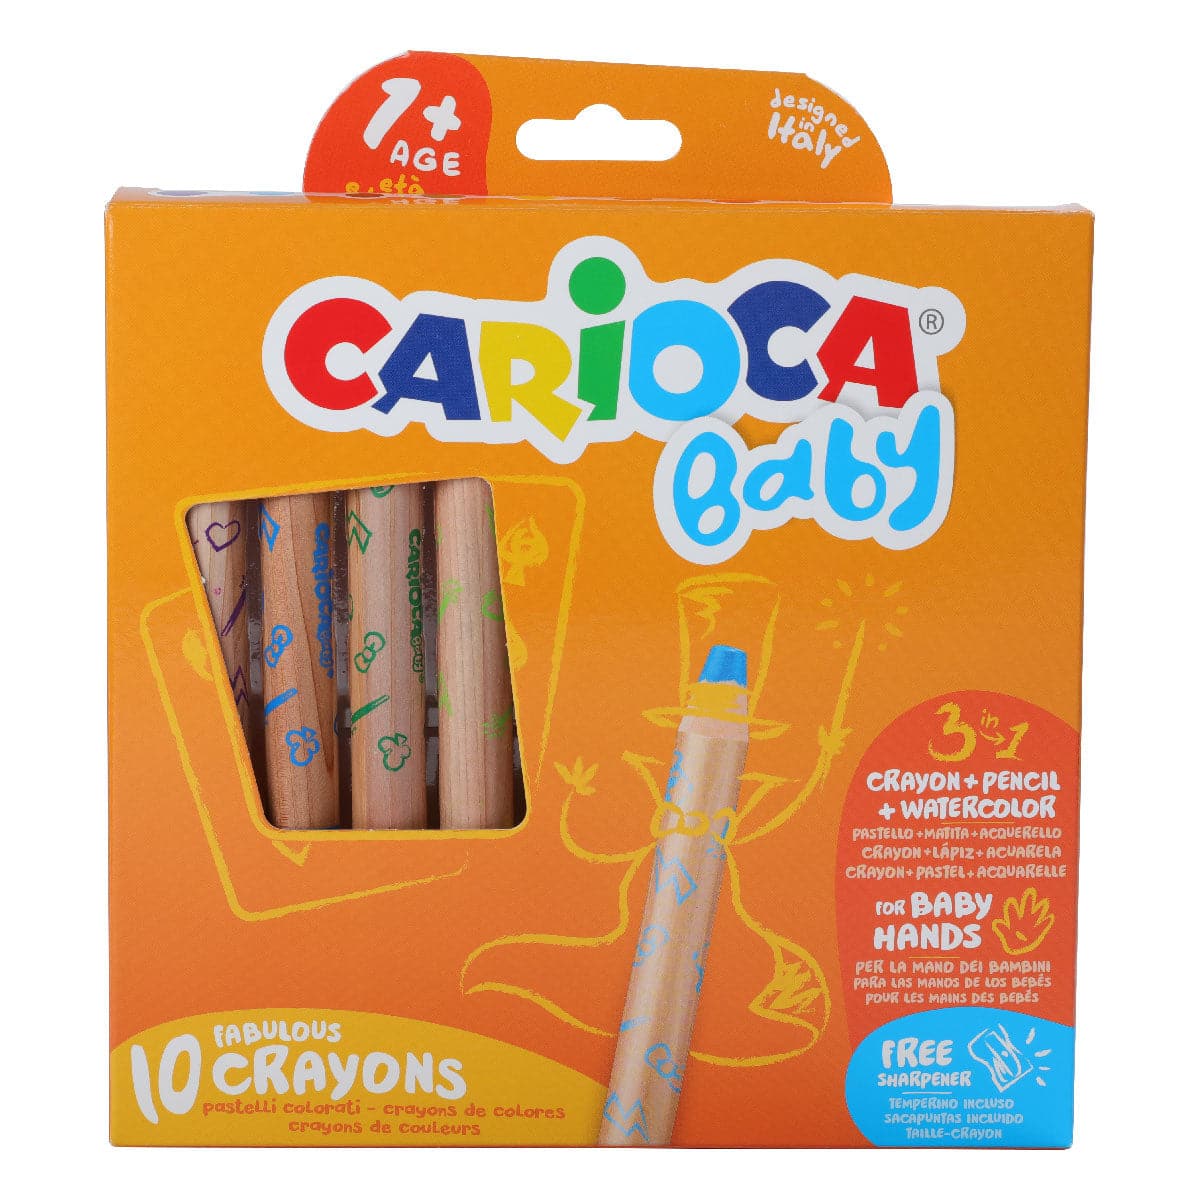 Shop Smarter. Live Better. Carioca Baby 3 in 1 Crayons 1+ Set 10 914